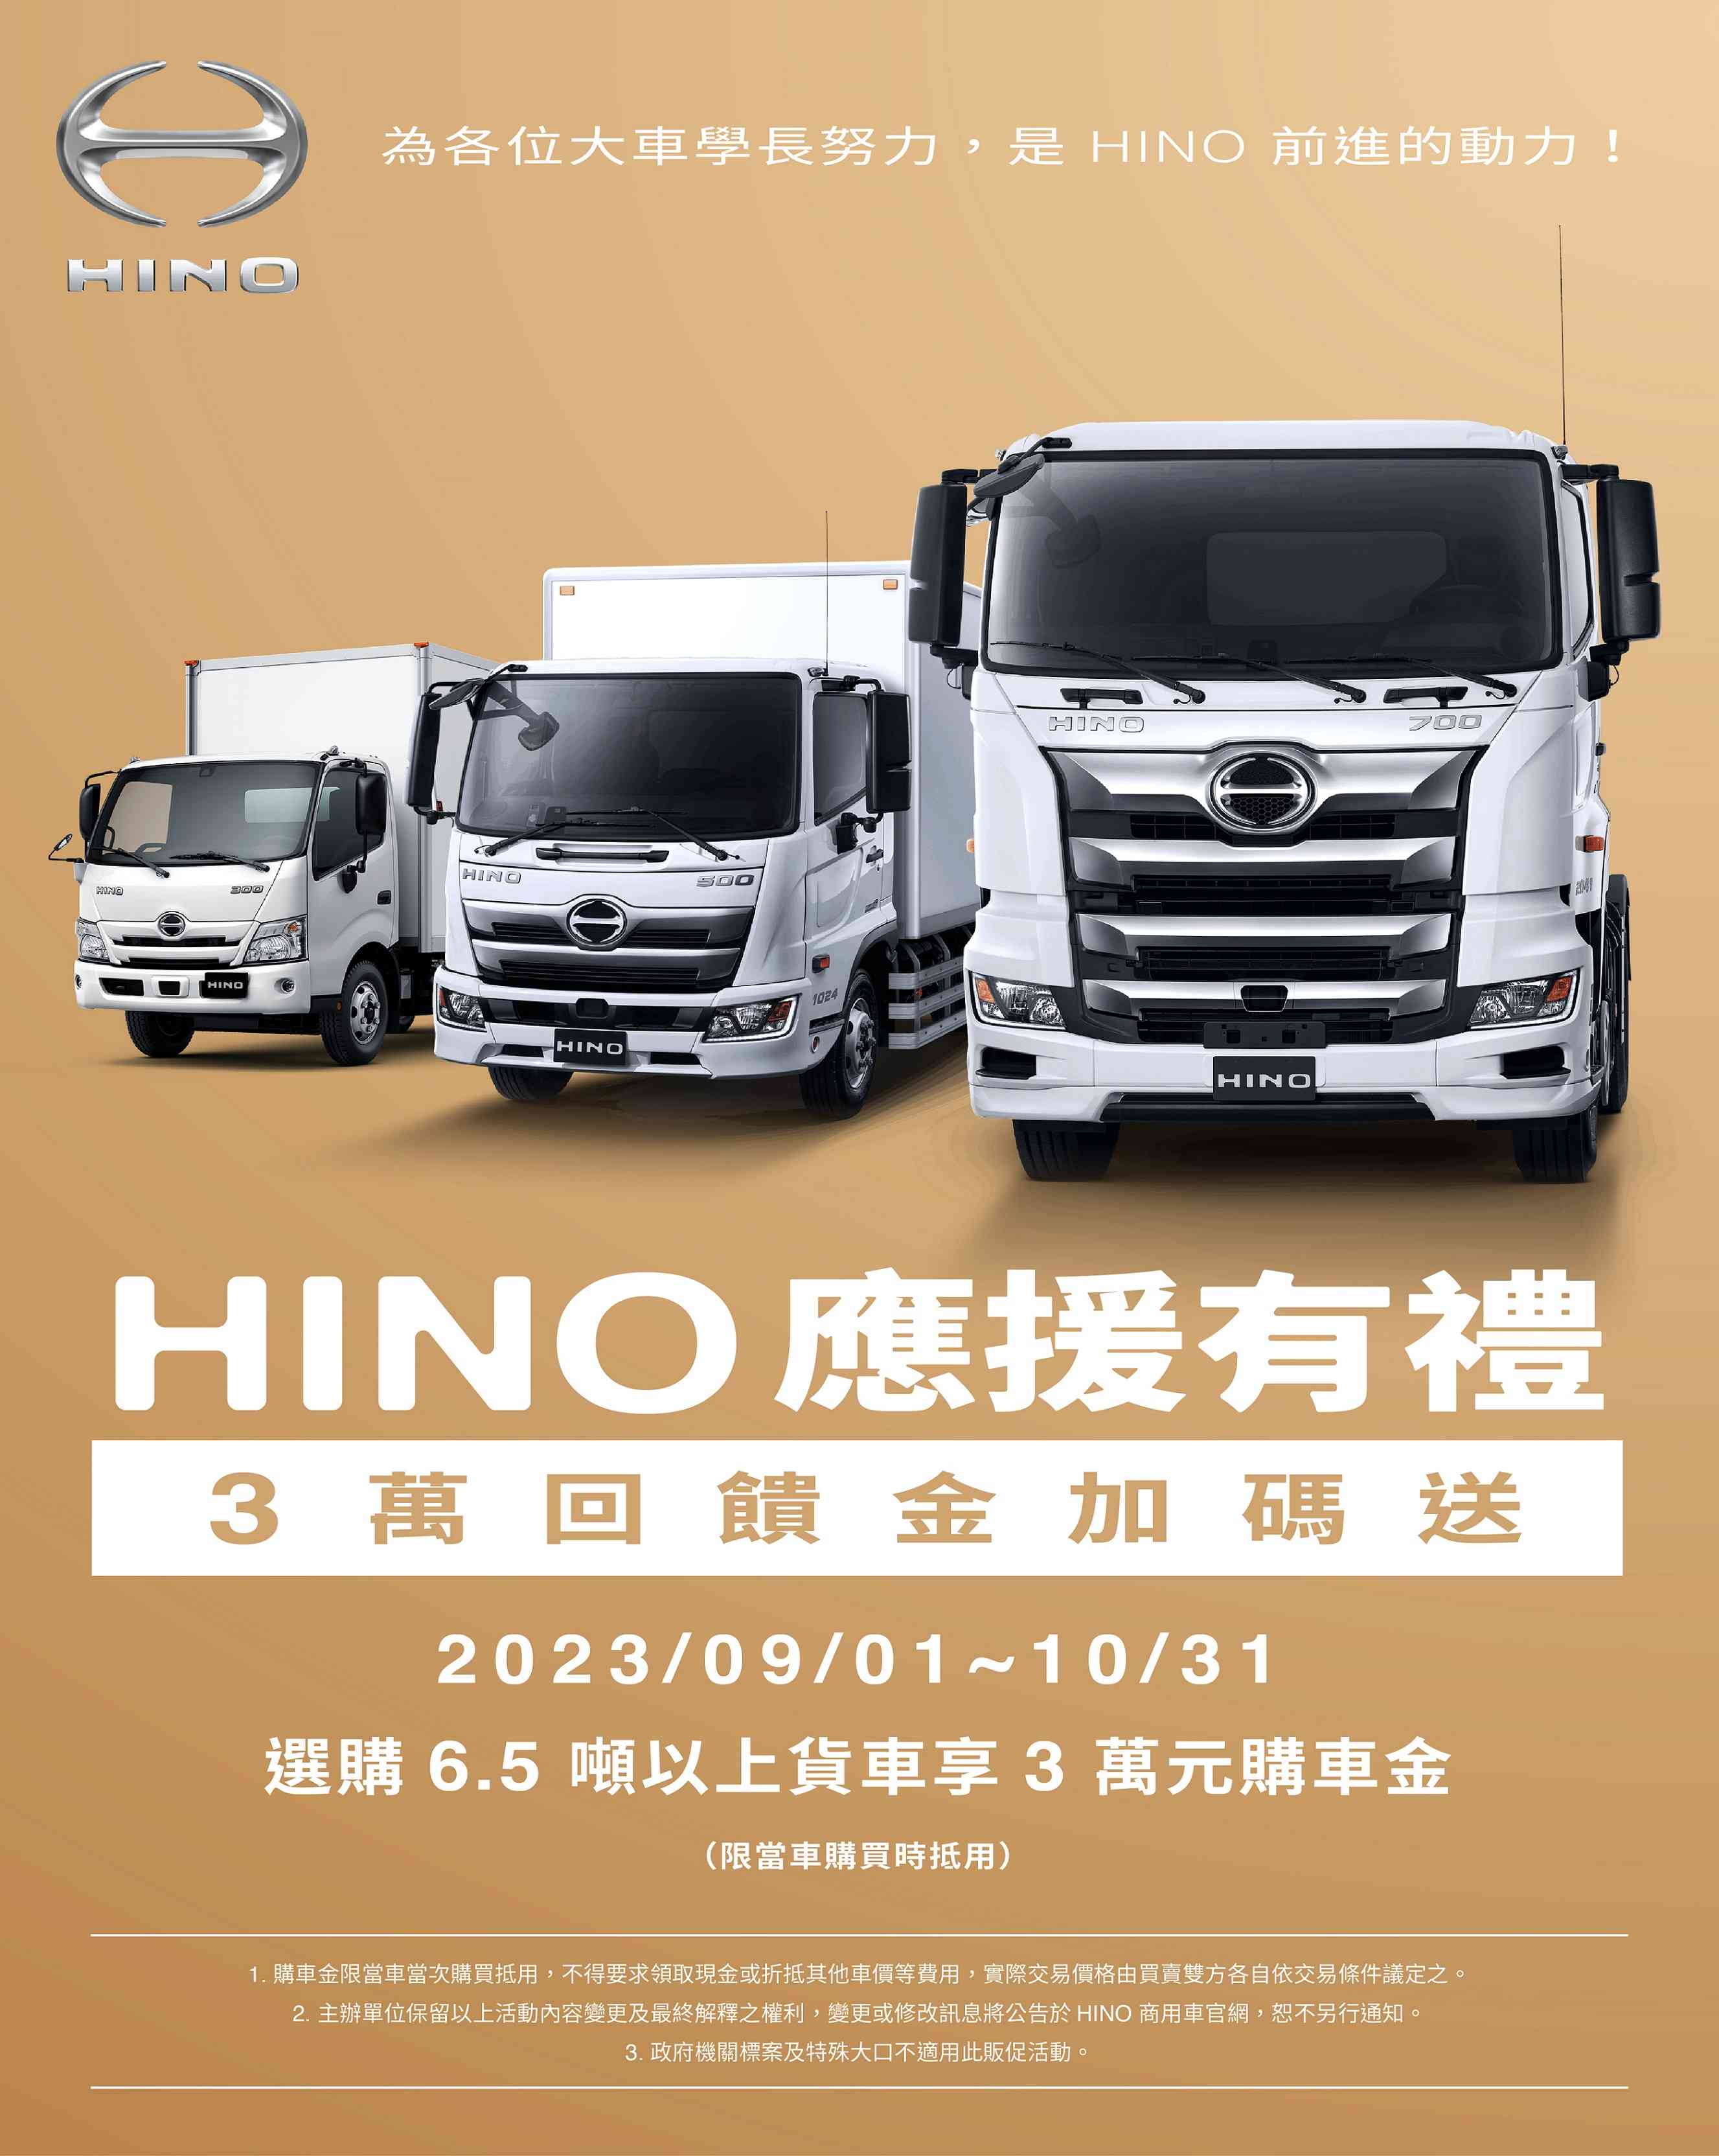 「HINO應援有禮，3萬回饋金加碼送」選購6.5噸以上貨車立享購車金!